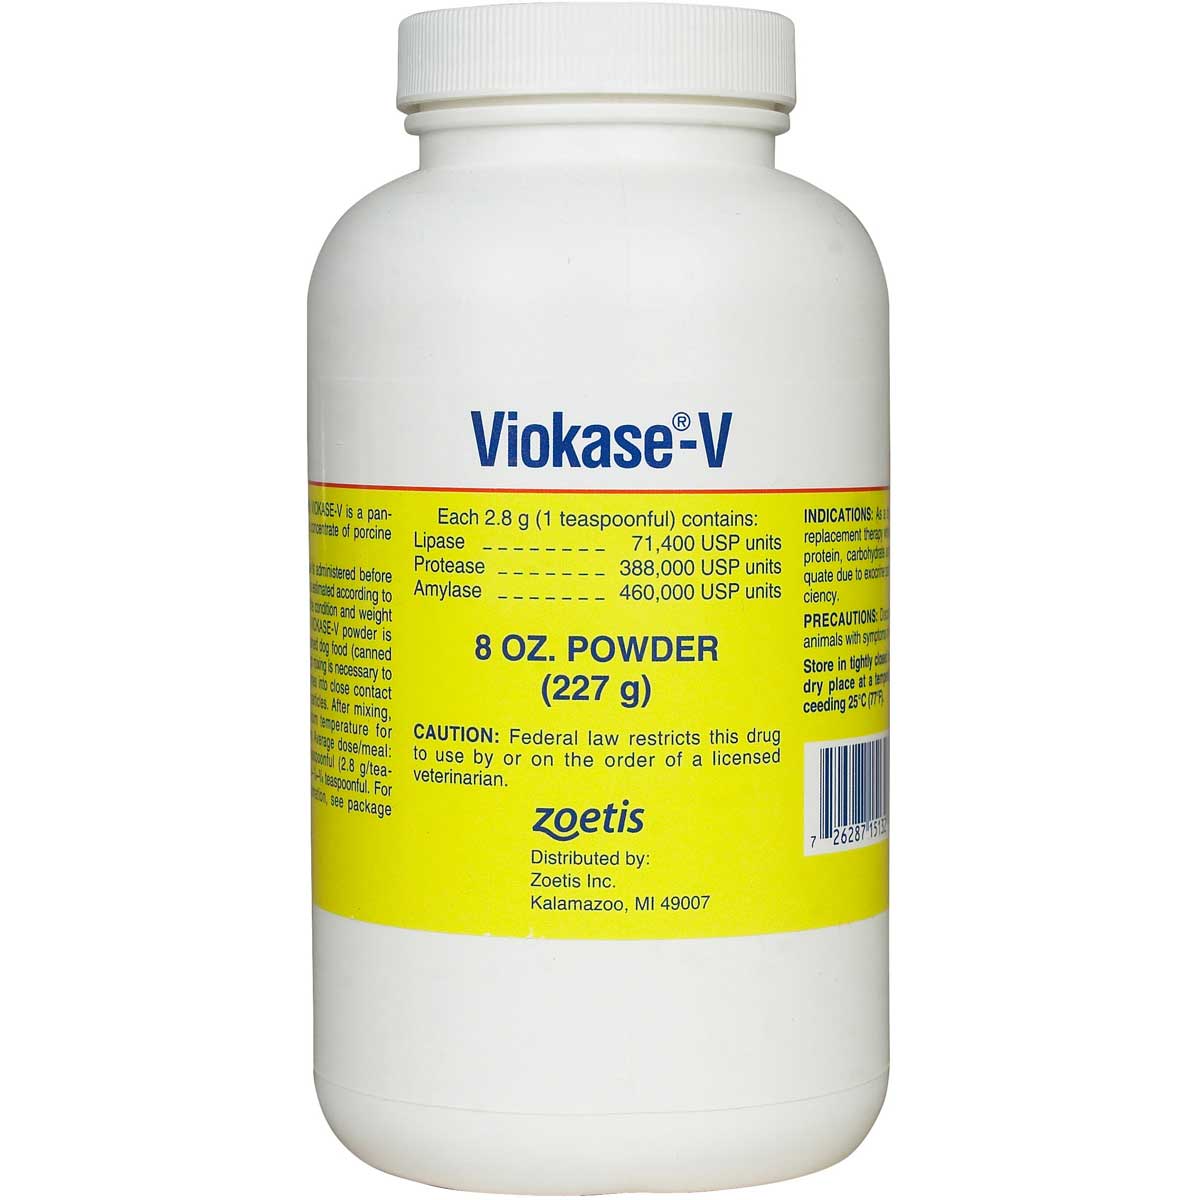 Viokase V Powder For Dogs Cats Zoetis Animal Health Safe Pharmacy Liver Pancreatic Dog Rx Pet